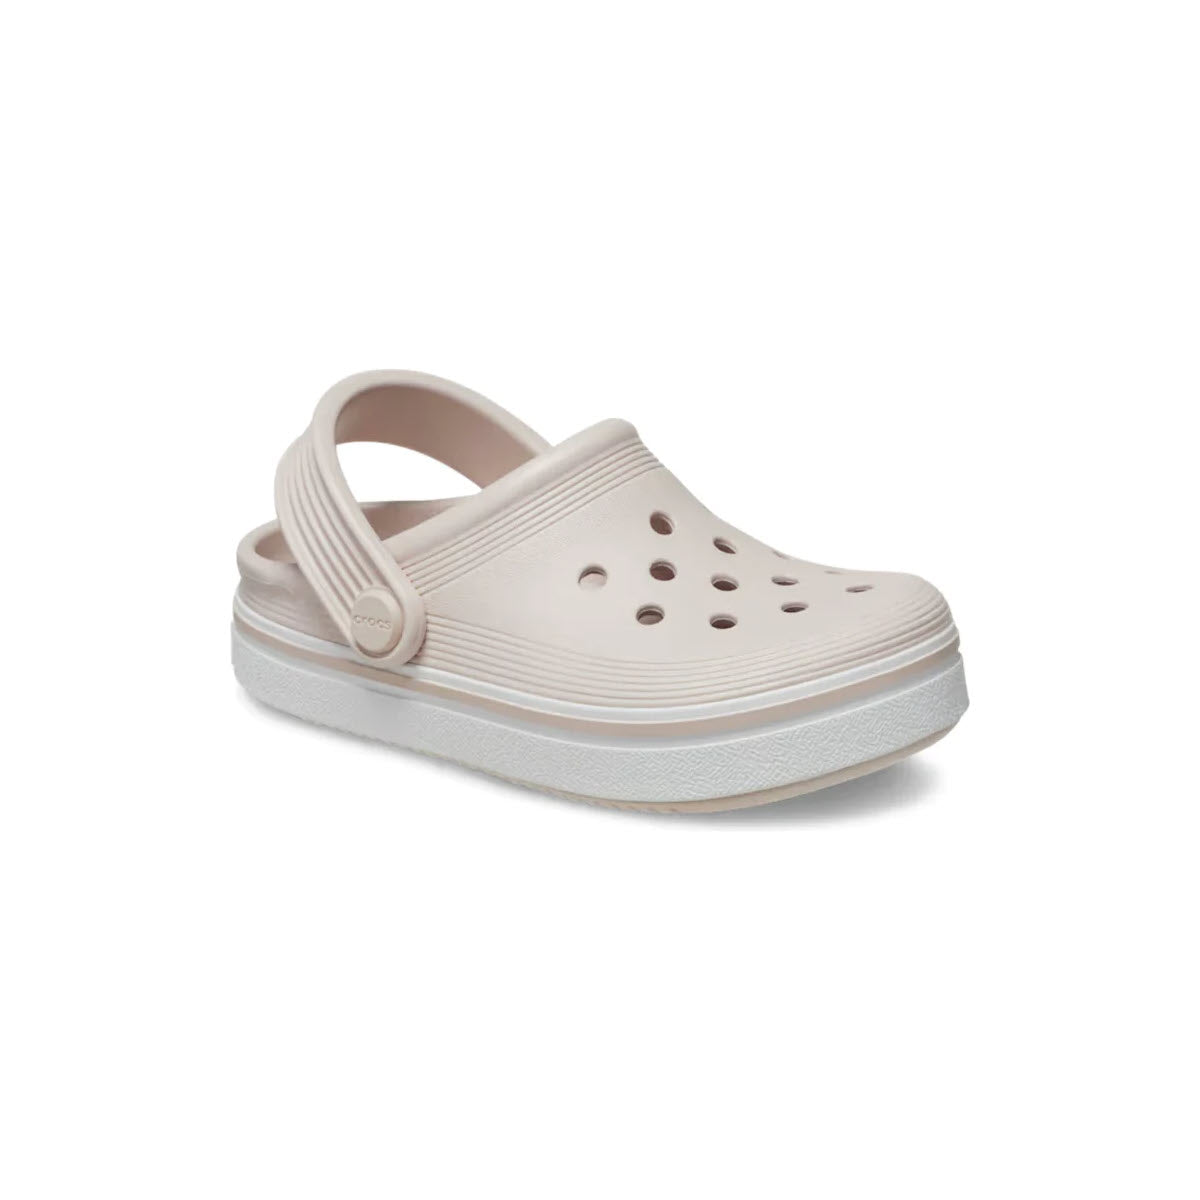 A single Crocs OFF COURT CLOGS QUARTZ - KIDS casual clog-style shoe on a white background.